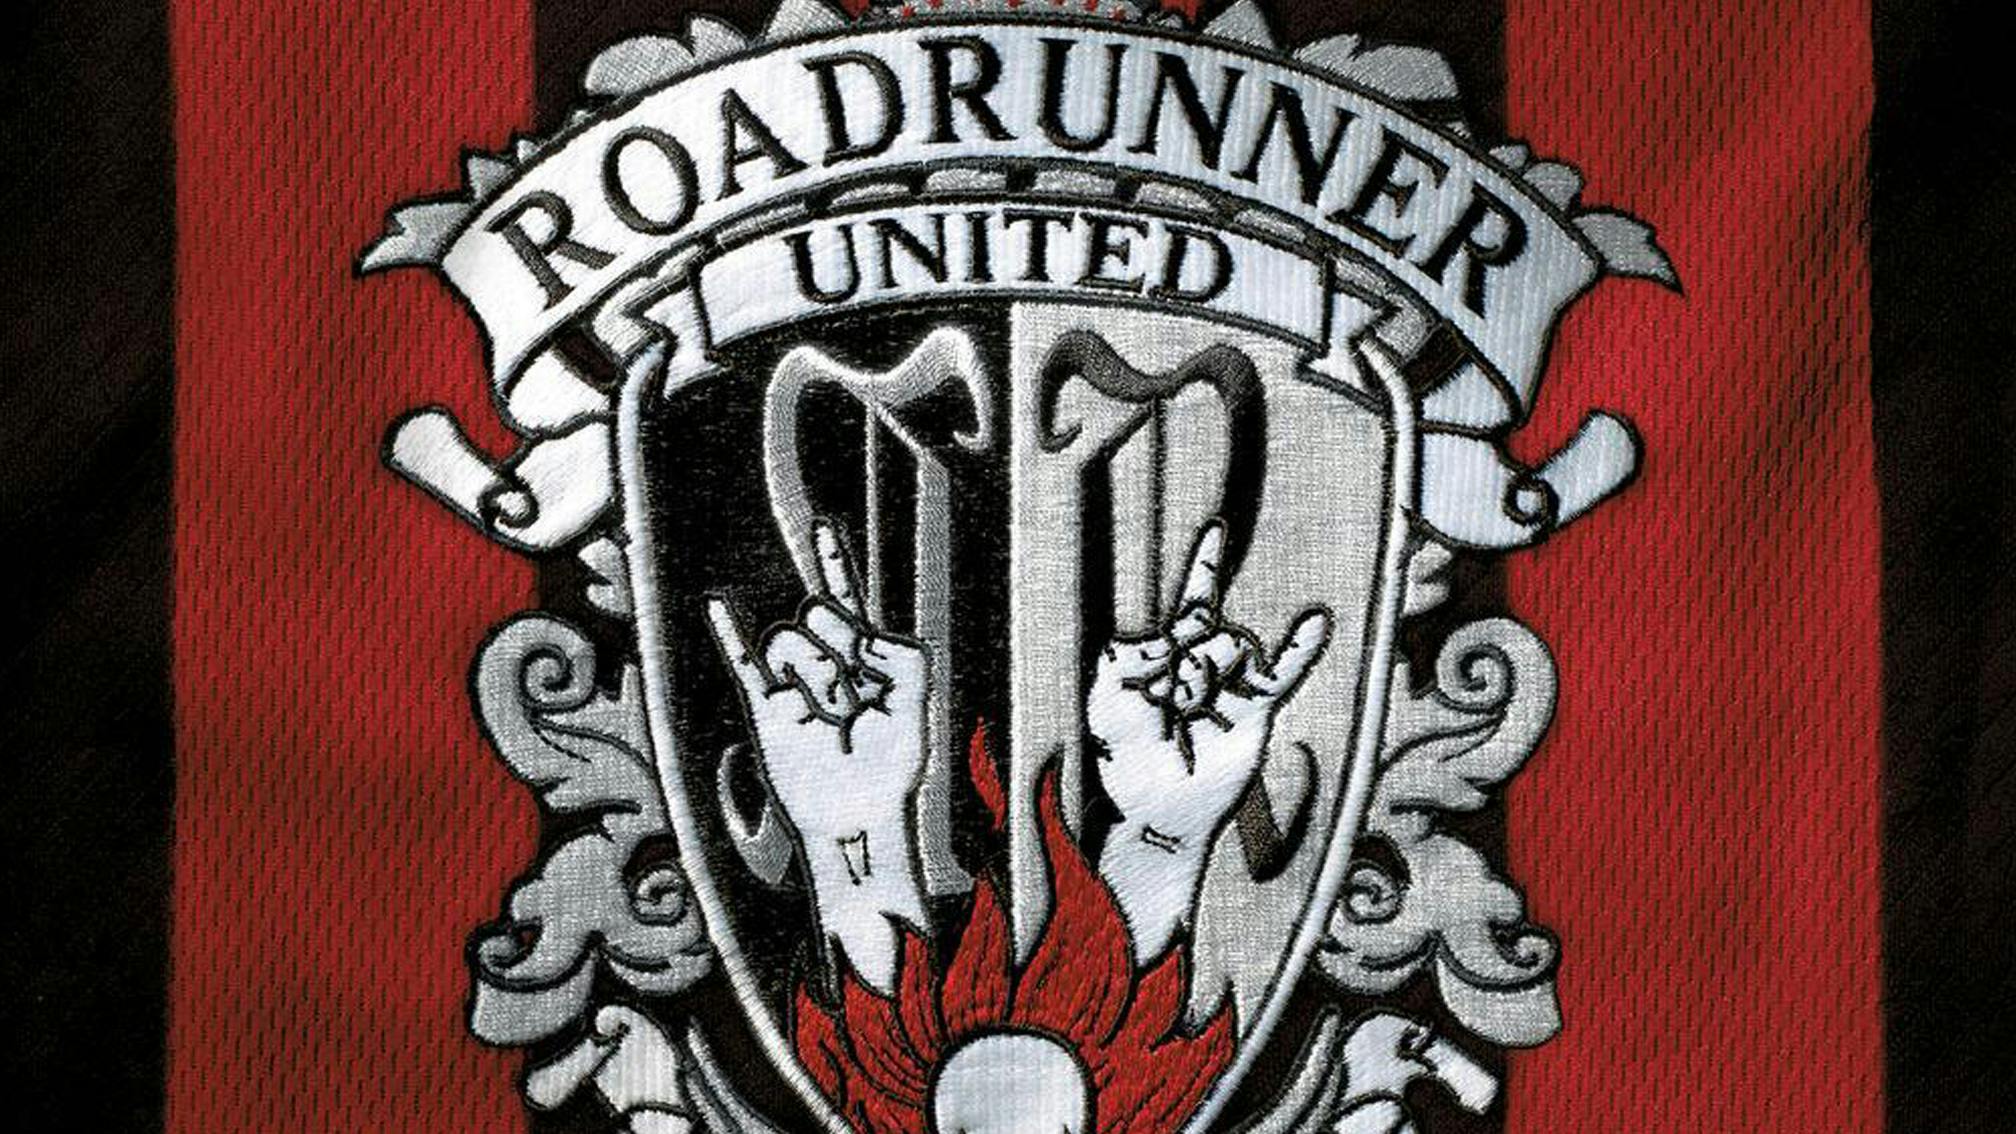 The inside story of Roadrunner United: “The super-est of all supergroups”